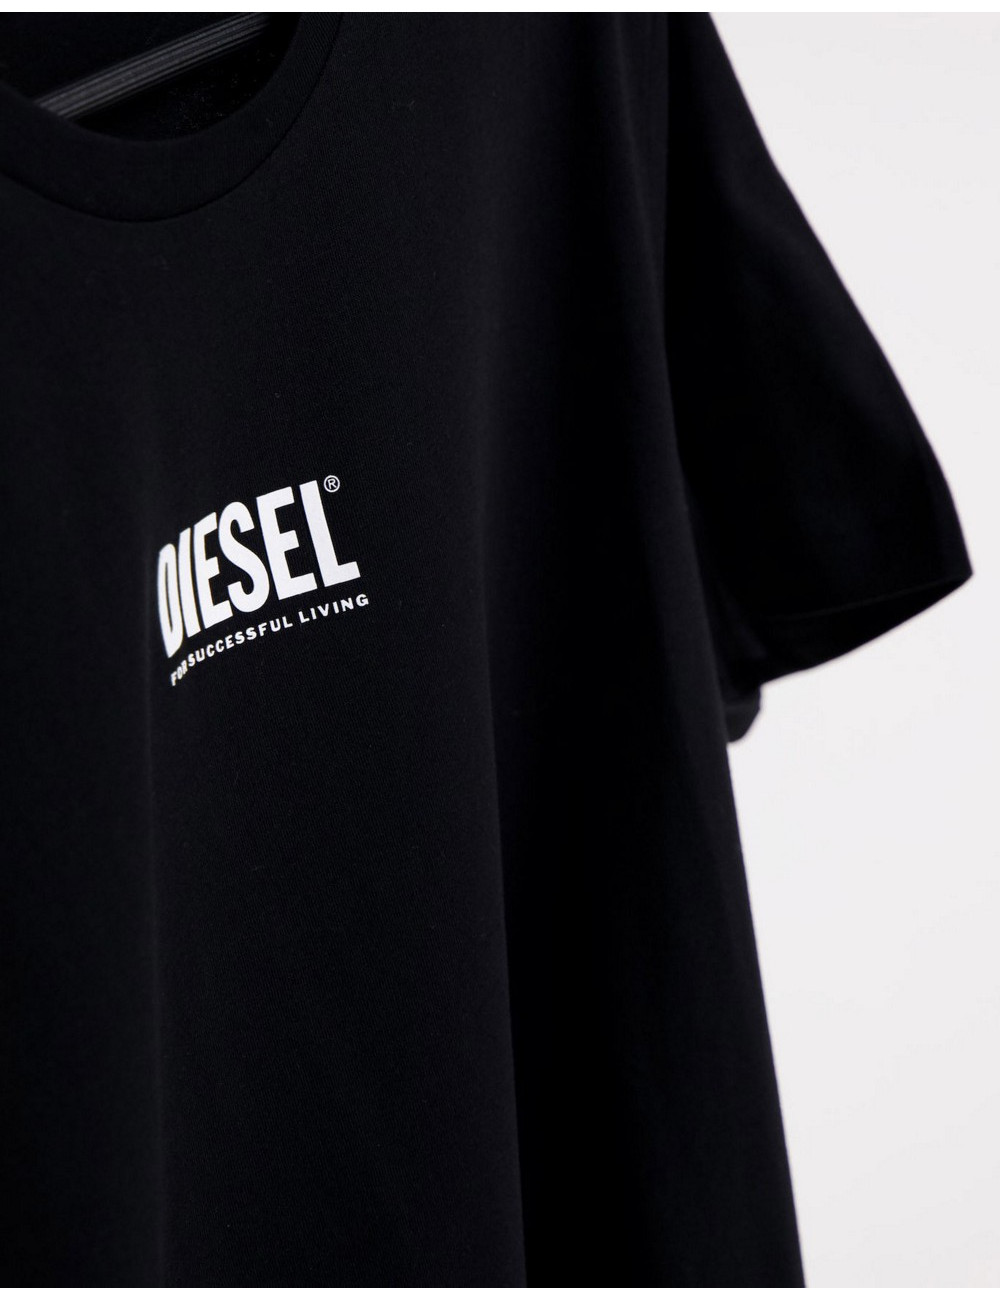 Diesel small logo t-shirt...